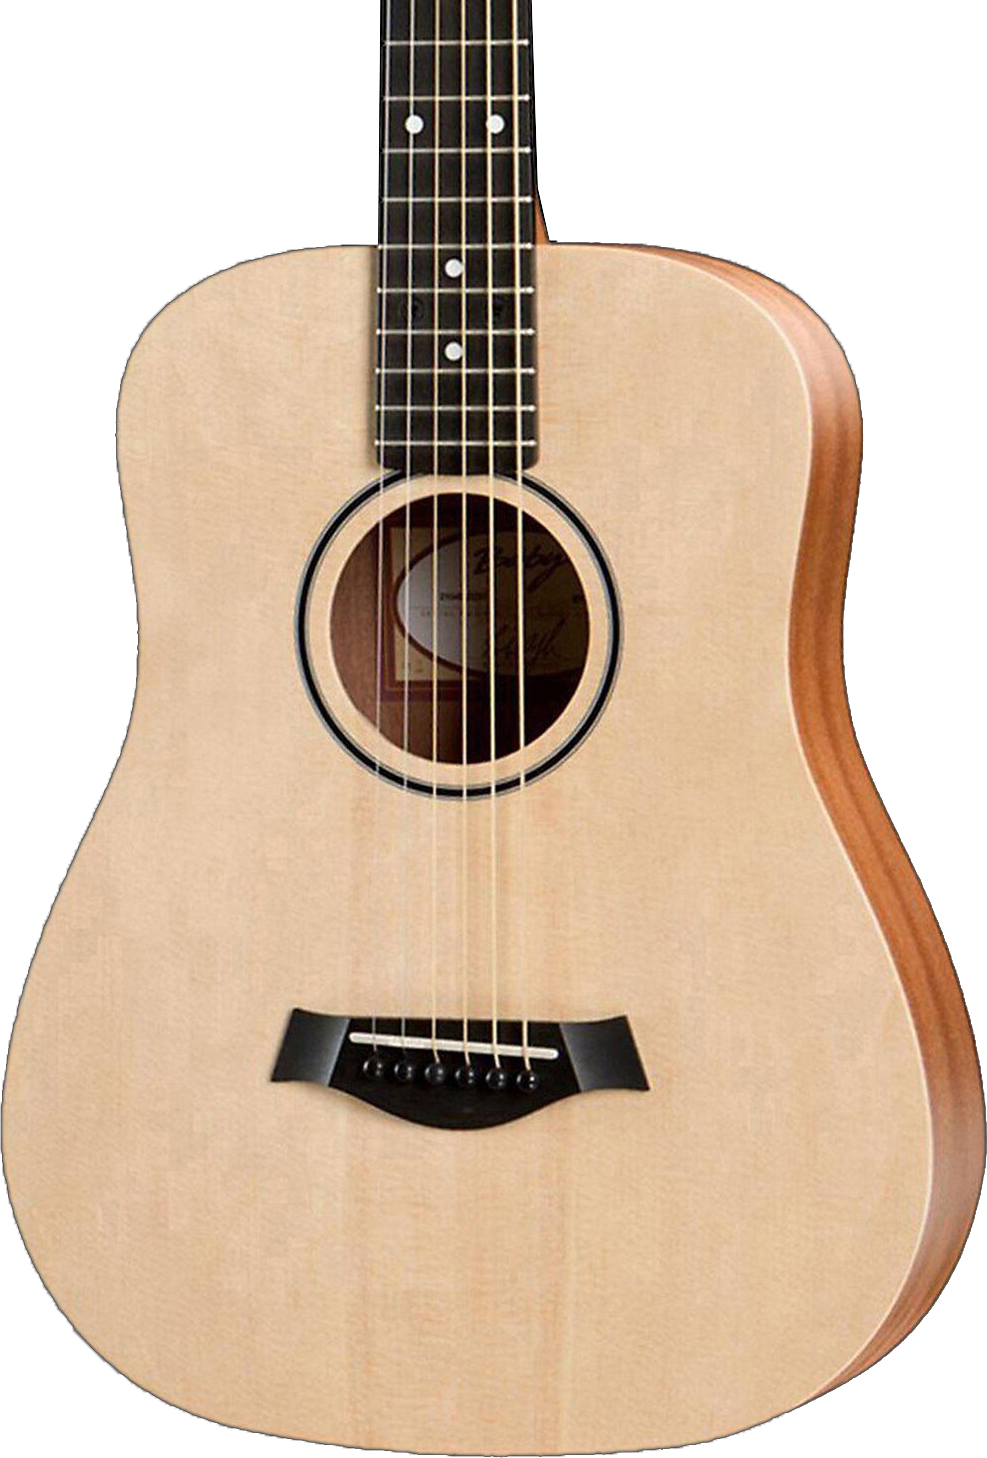 Taylor BT1LH Baby Taylor Spruce 3/4 Left Handed Acoustic Guitar w/ Gigbag